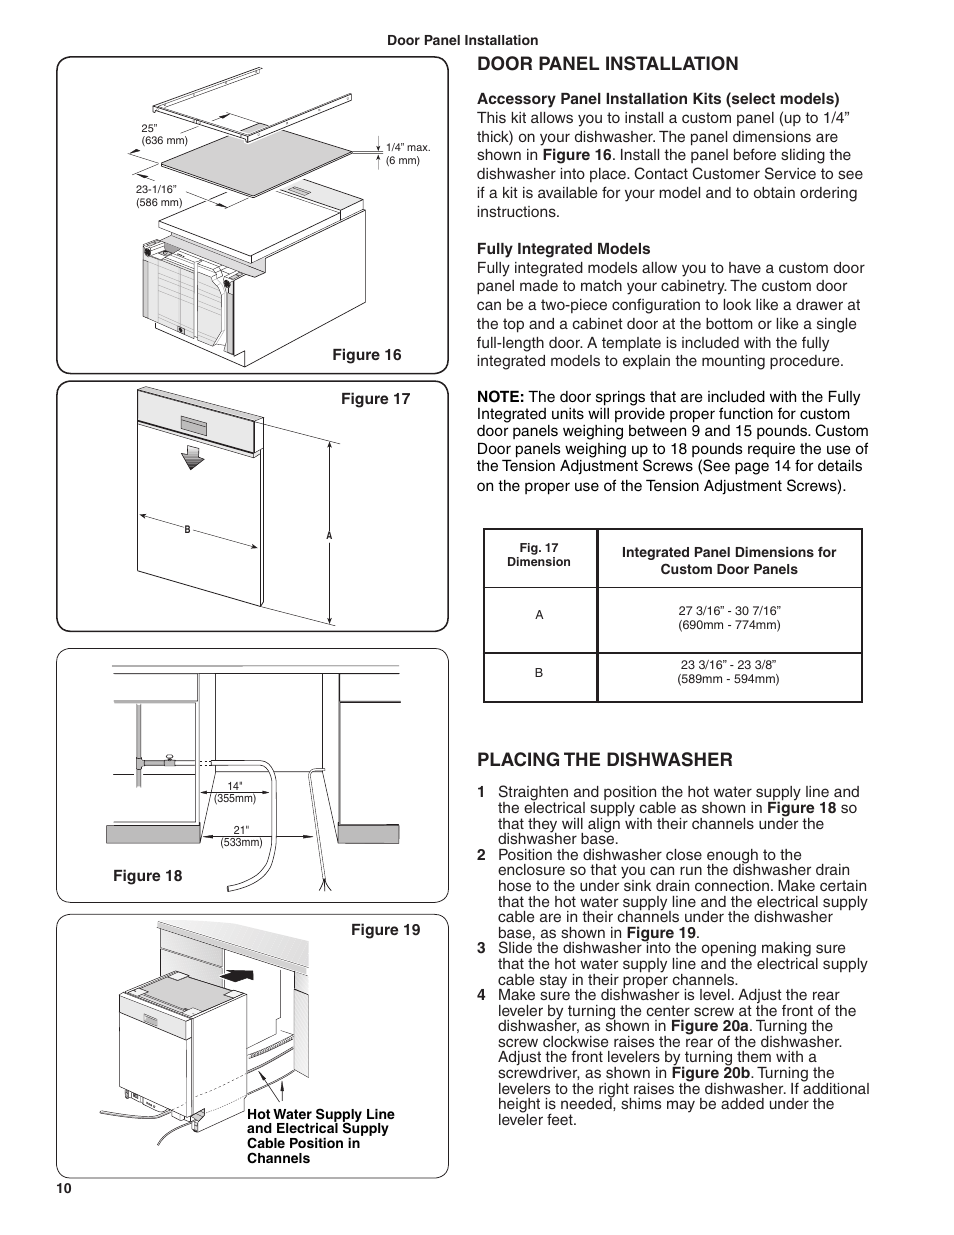 Door panel installation, Placing the dishwasher | Bosch BSH Dishwasher User  Manual | Page 10 / 48